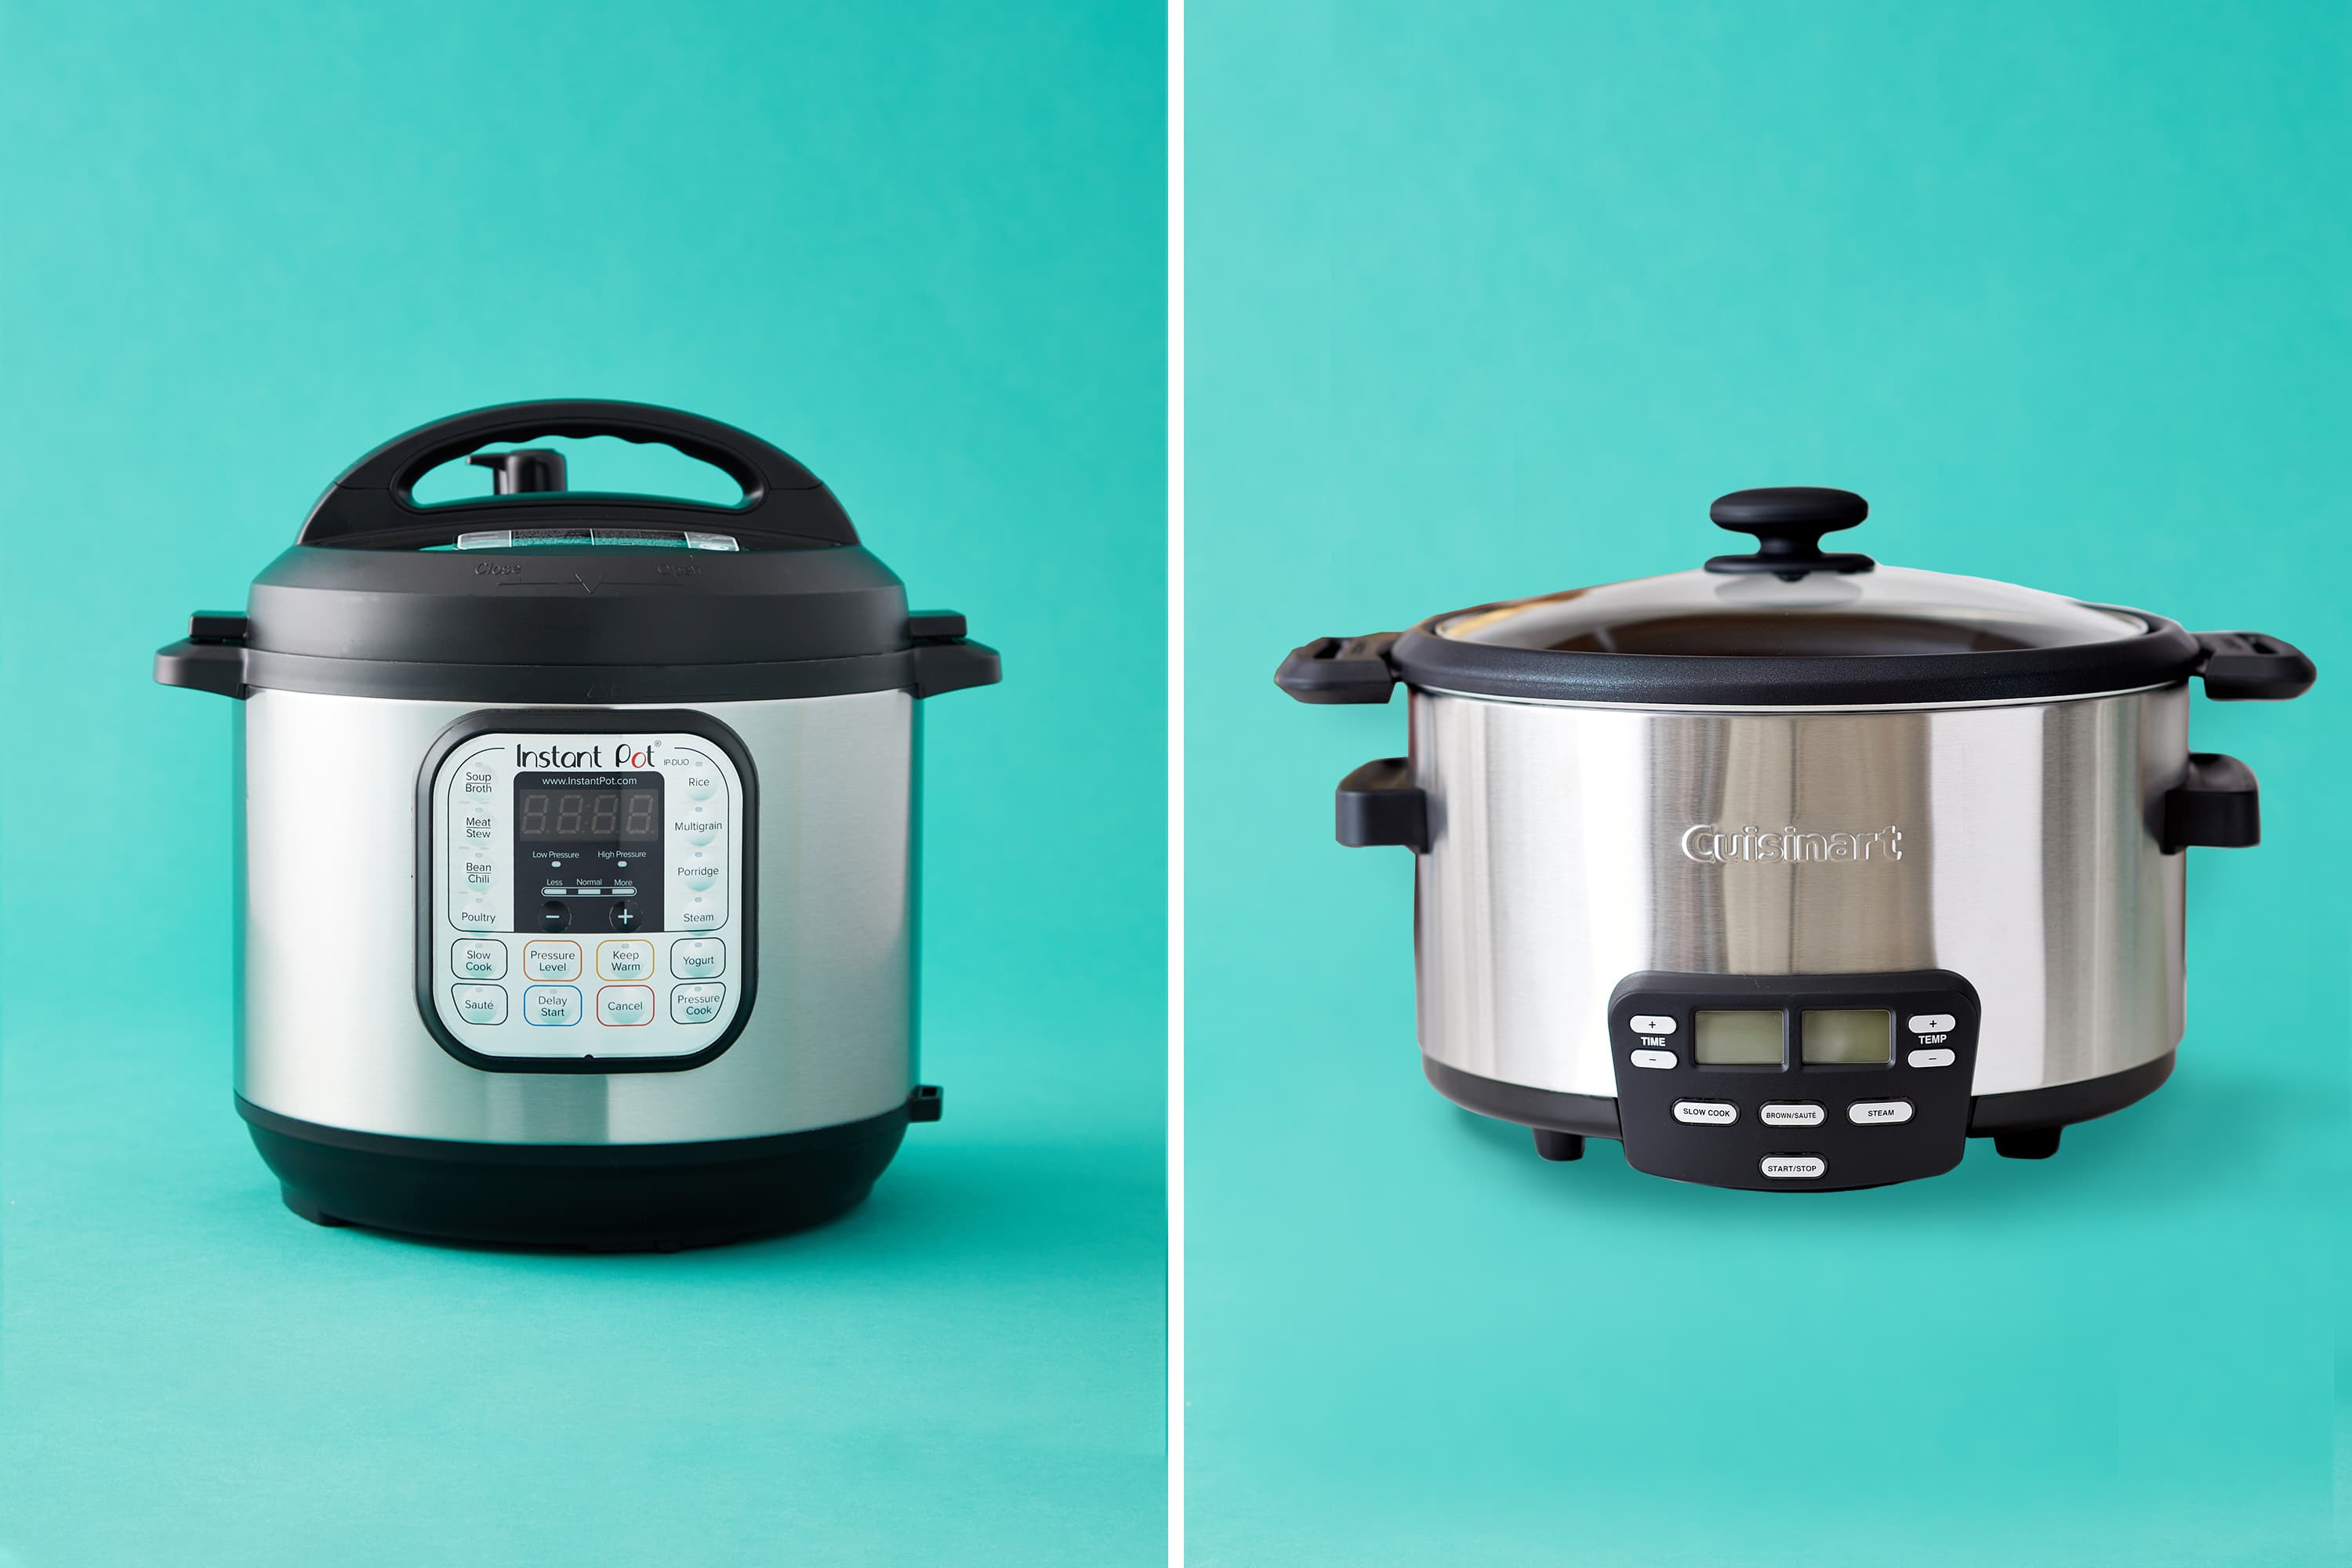 Black & Decker's pressure cooker can't cook like an Instant Pot - CNET